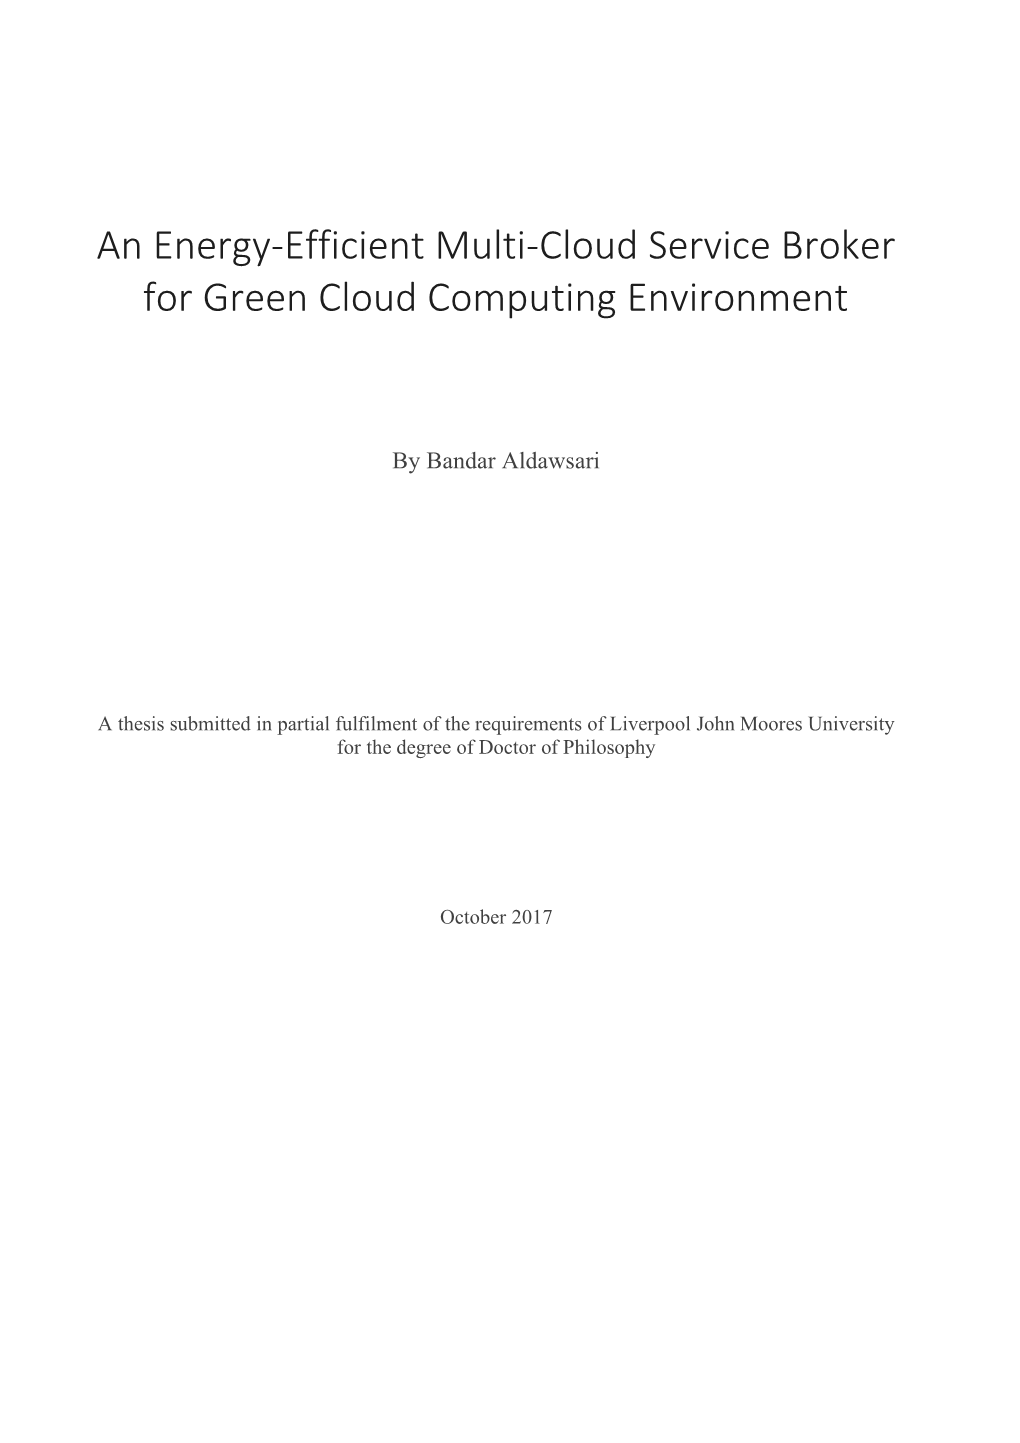 An Energy-Efficient Multi-Cloud Service Broker for Green Cloud Computing Environment